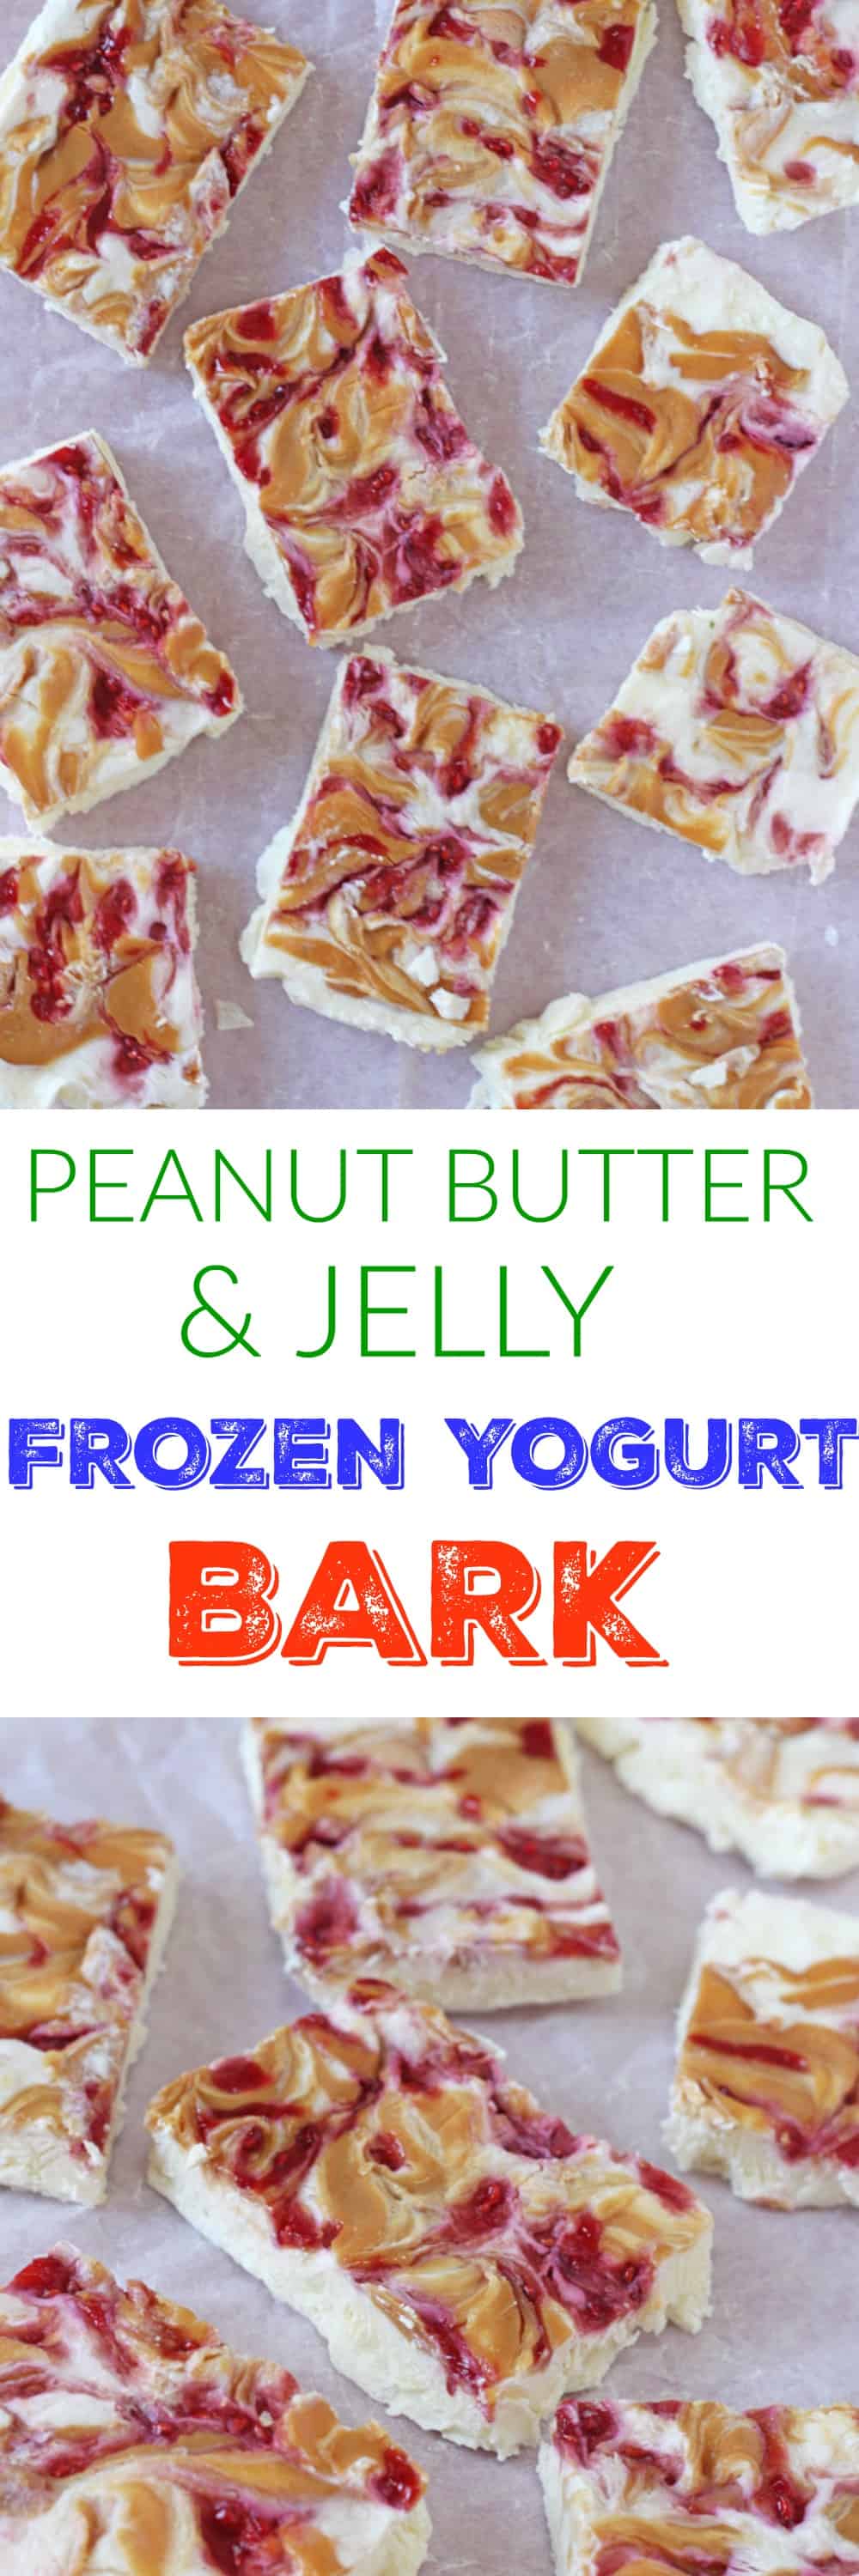 Peanut Butter & Jelly Frozen Yogurt Bark Pinterest Pin